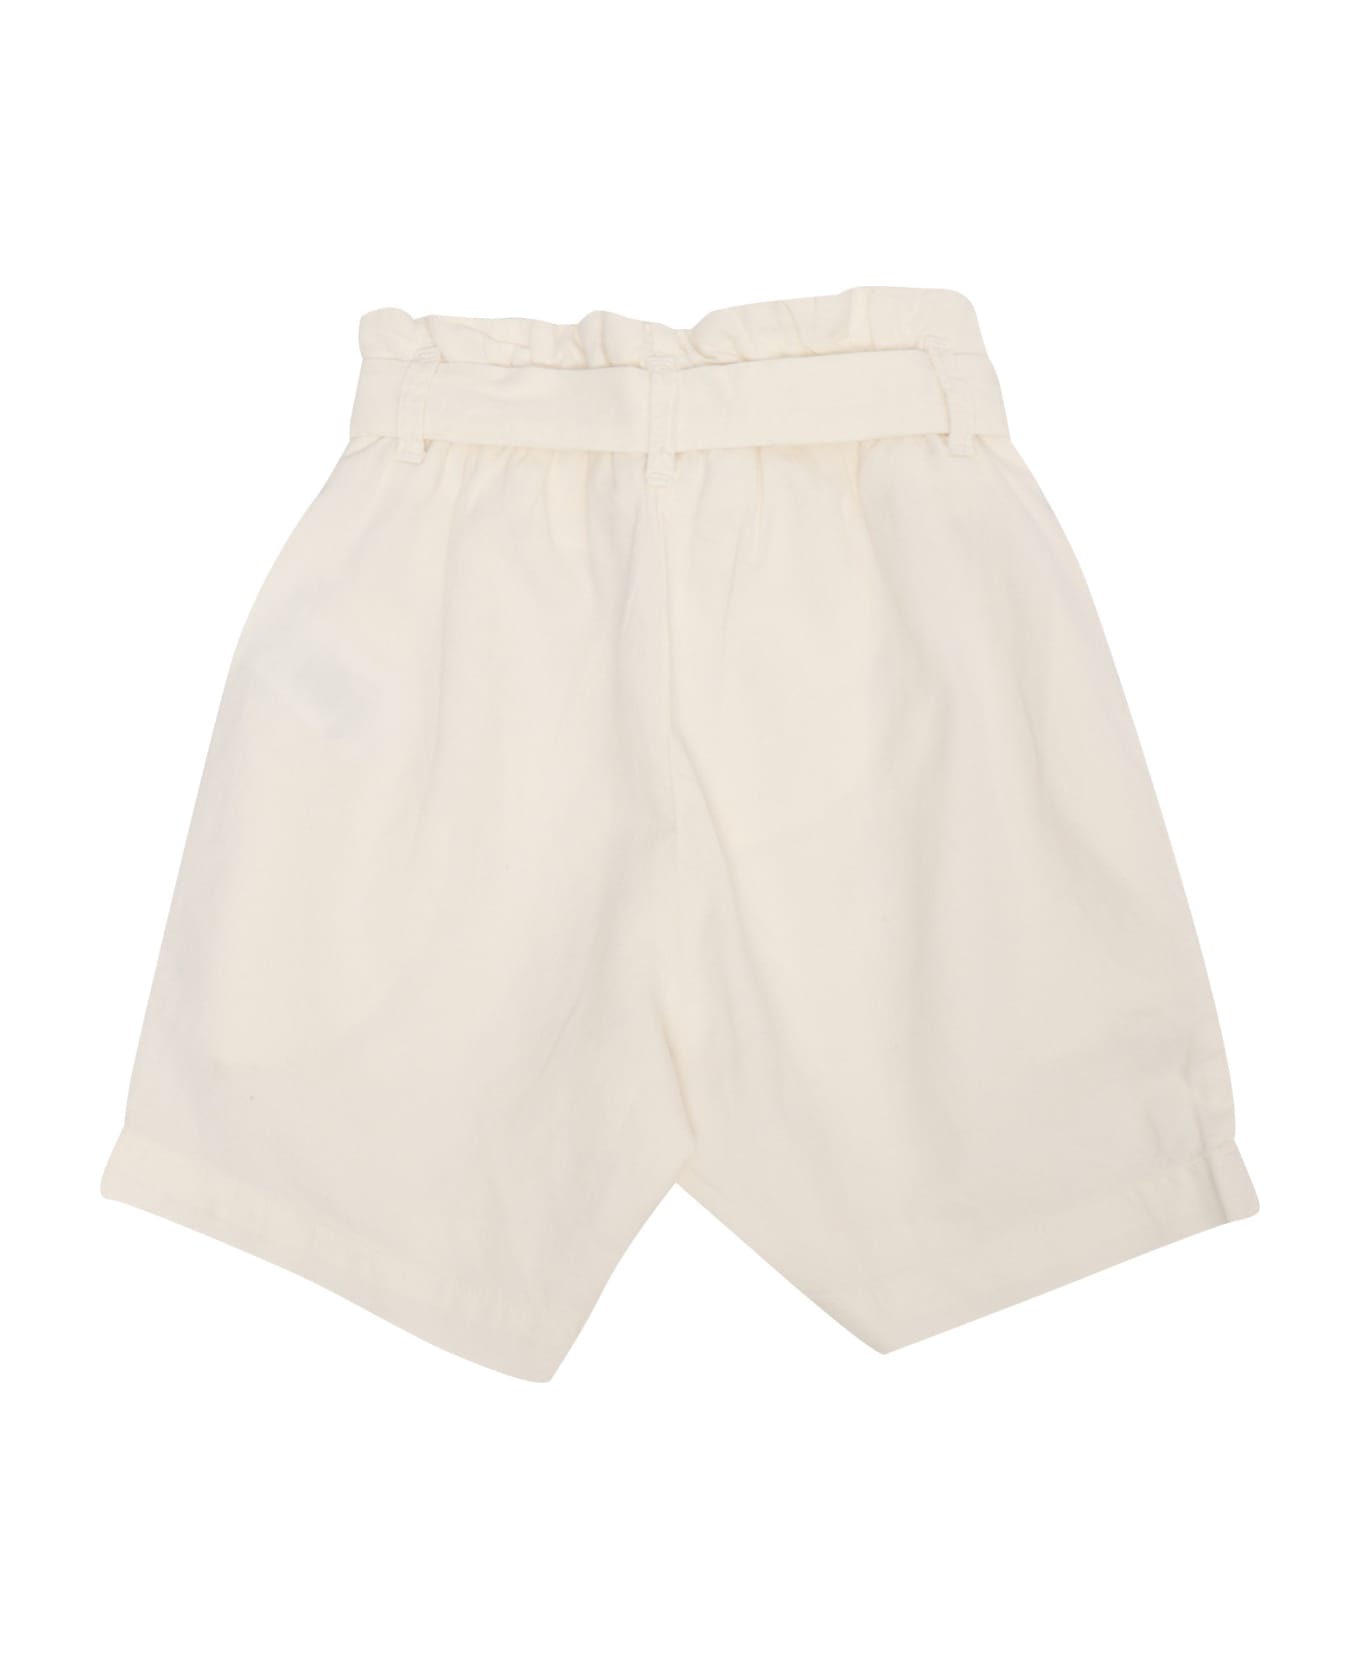 Bonpoint Bermuda Shorts For Girls - WHITE